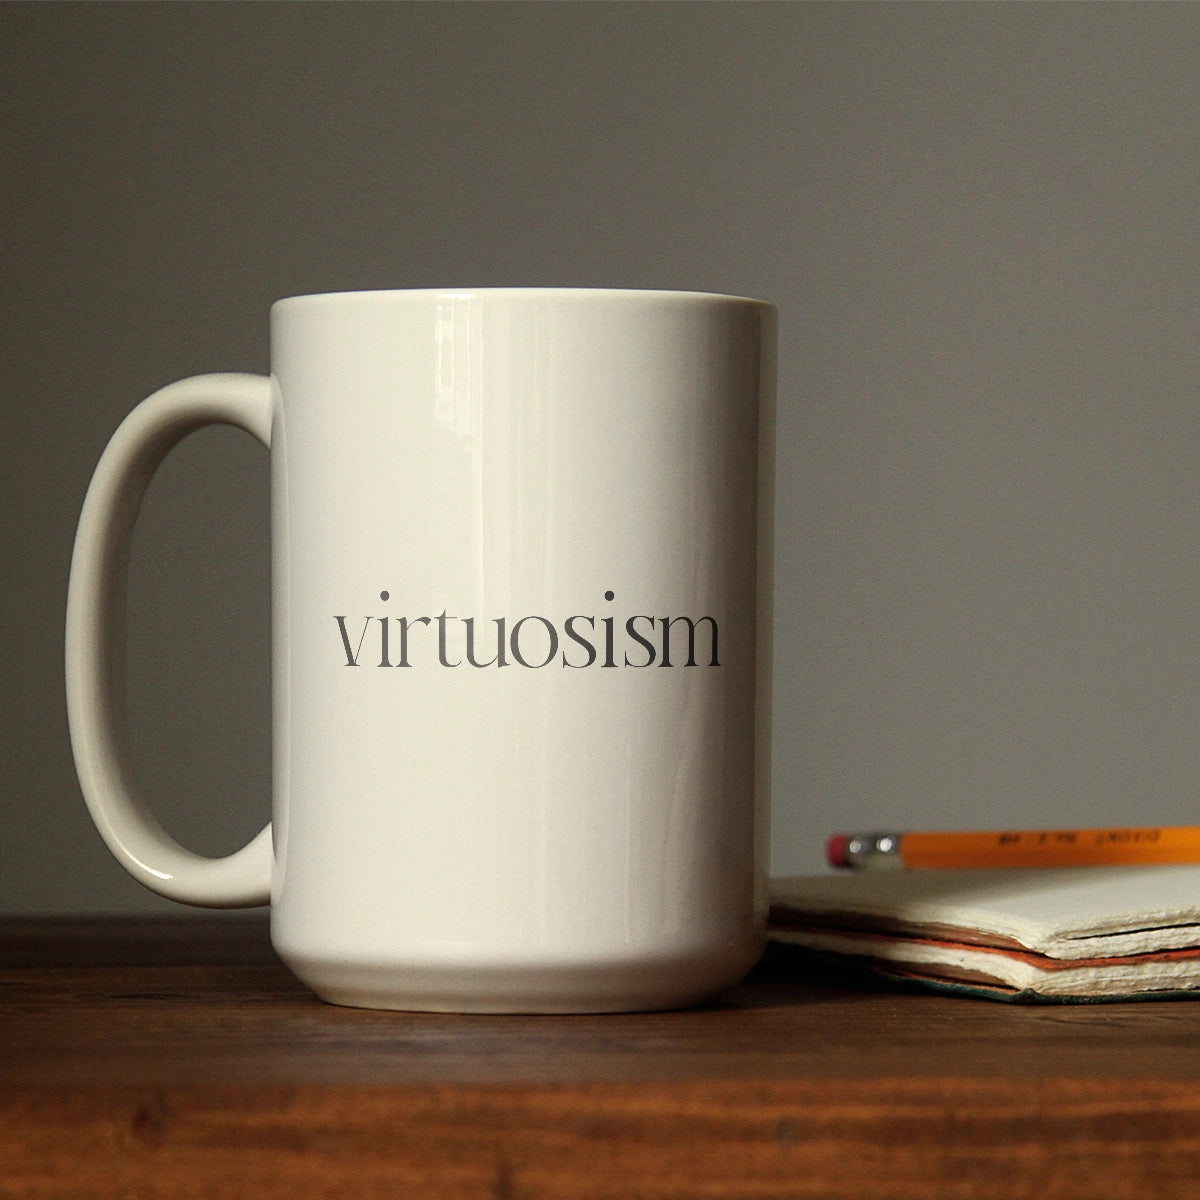 Virtuosism.com